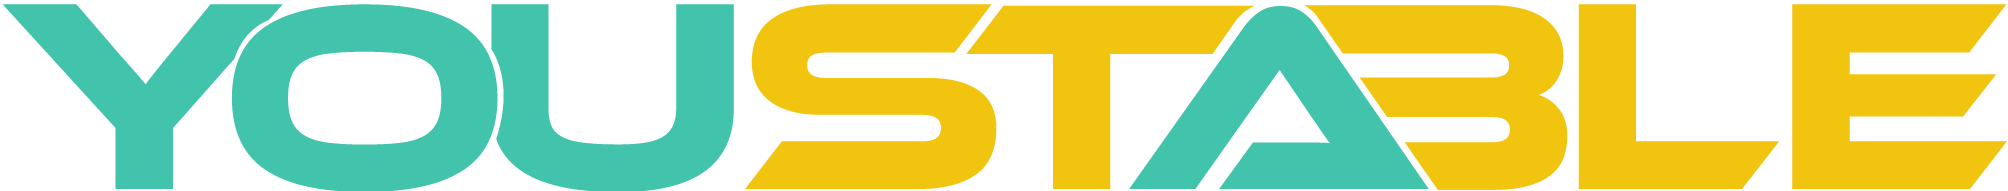 youstable-logo